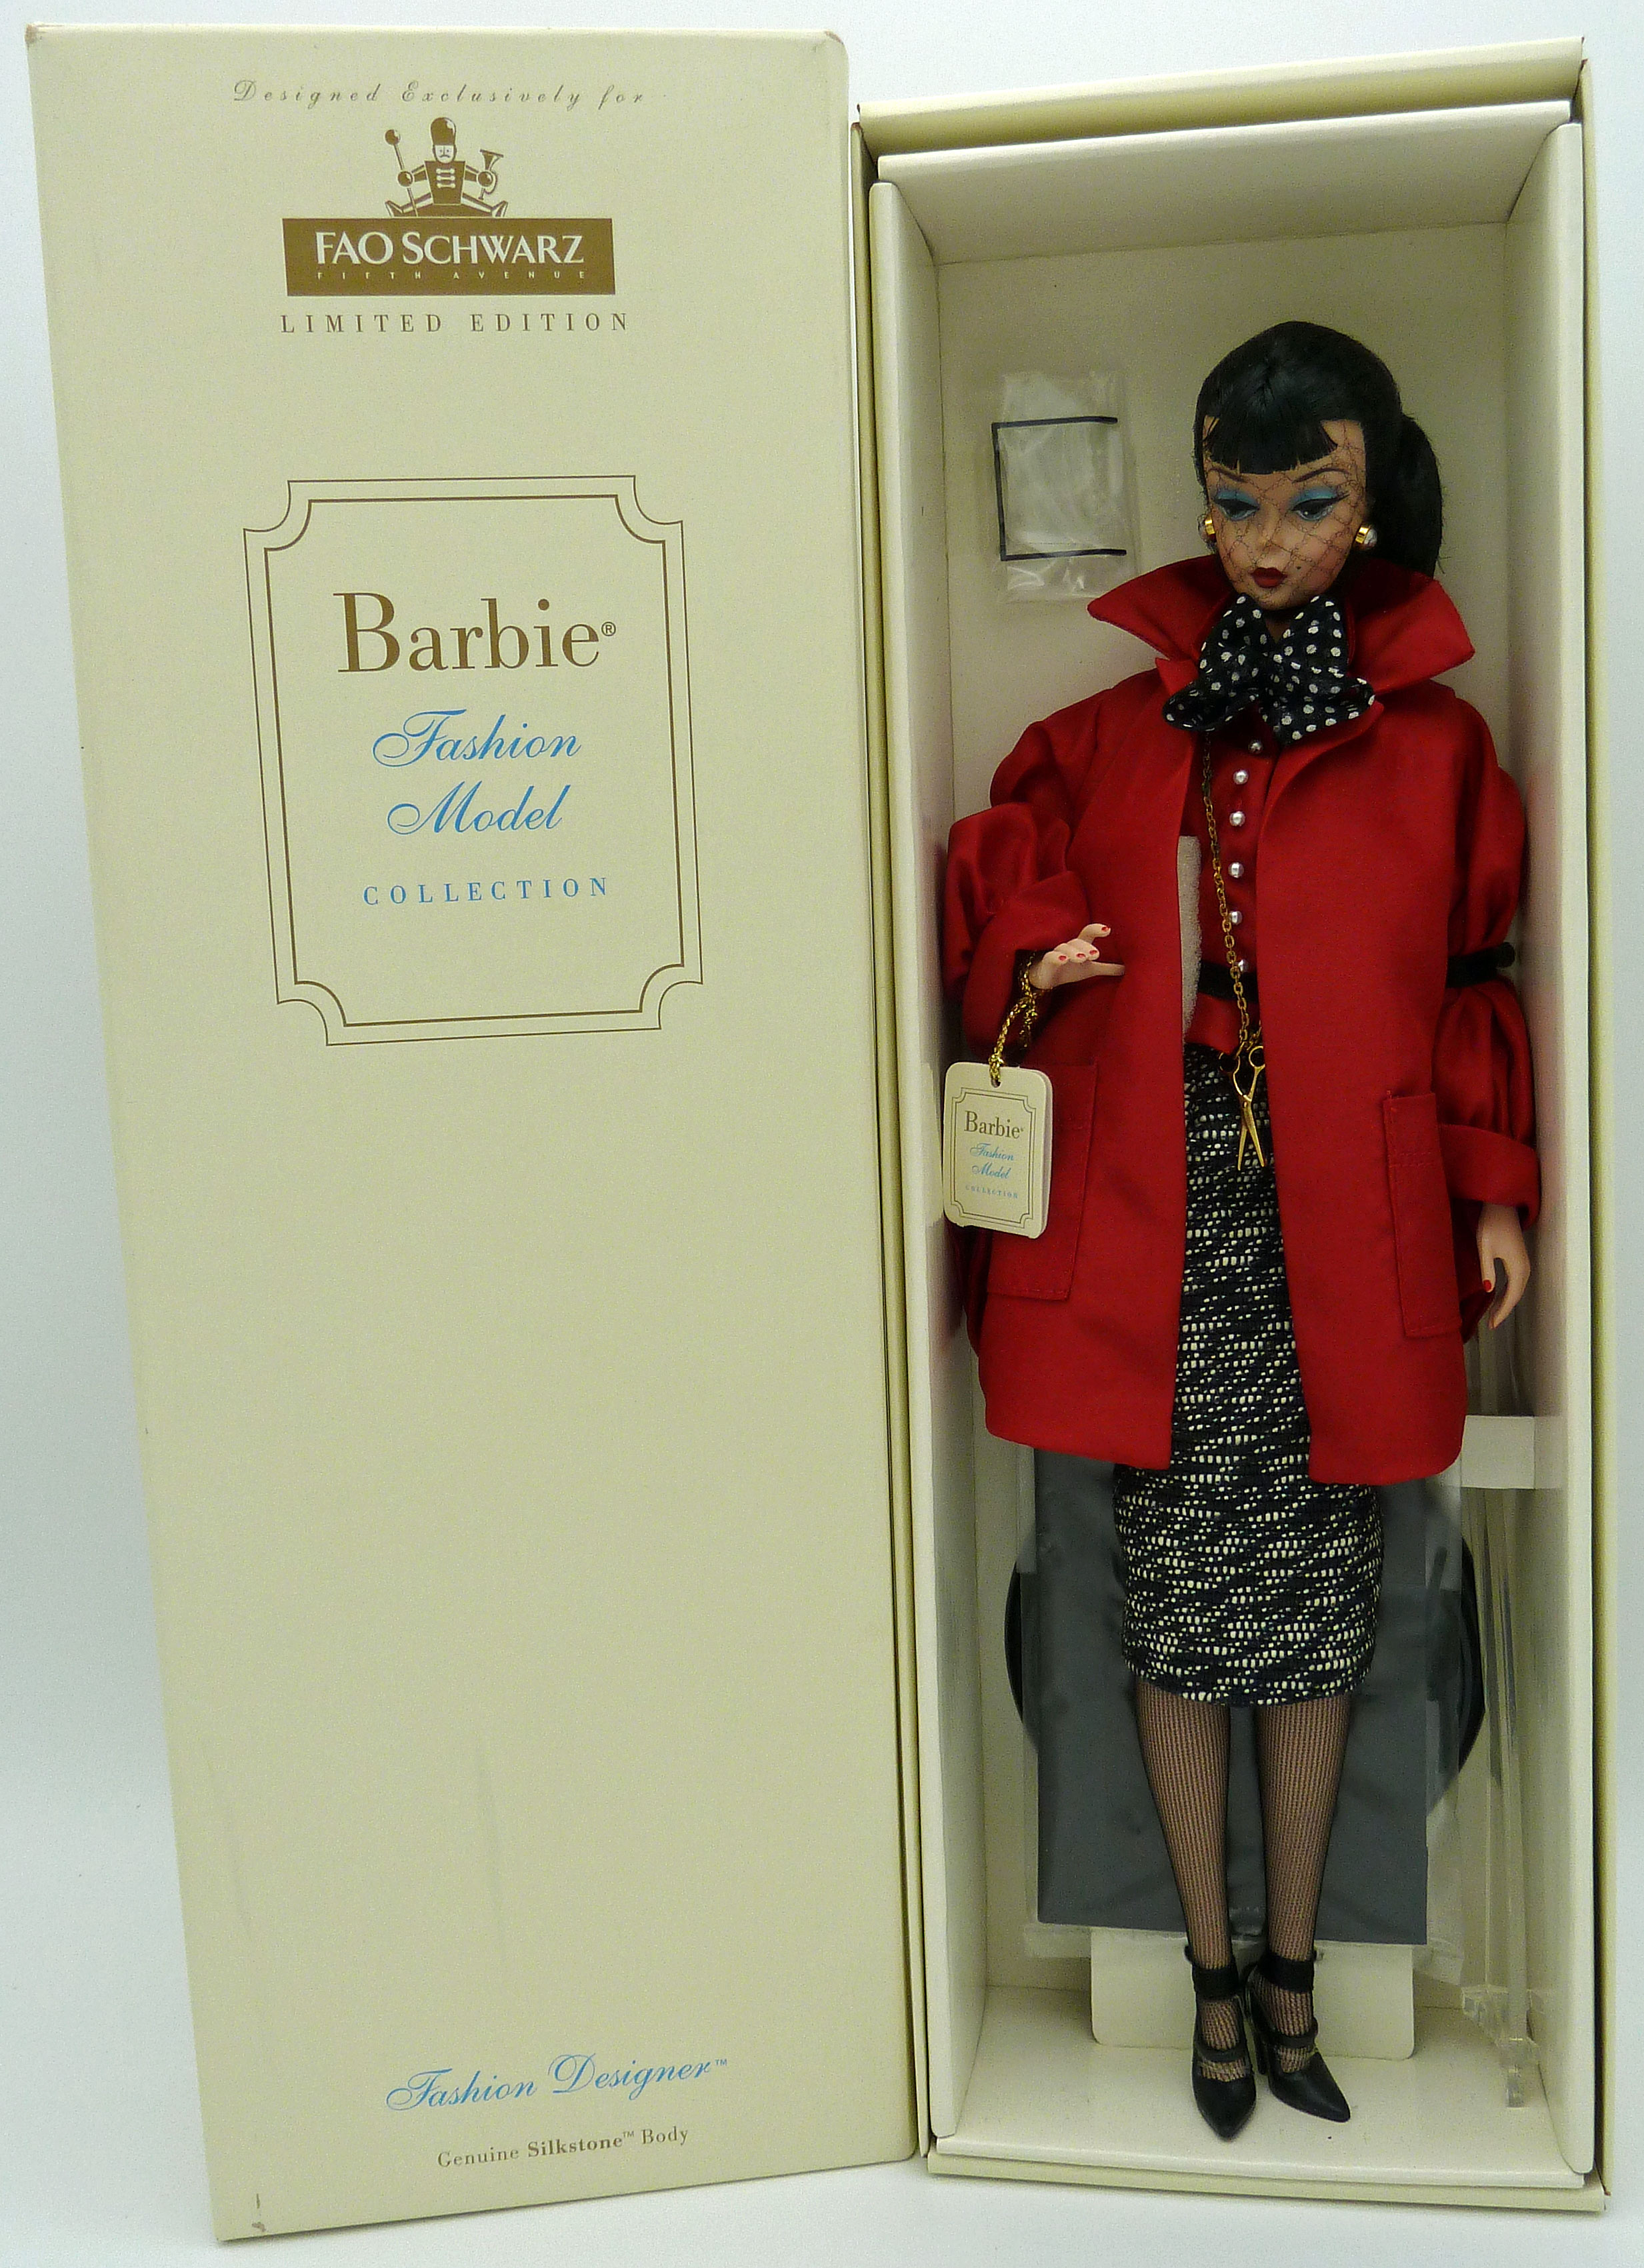 Designer Barbies: Limited-Edition Fashion Barbies